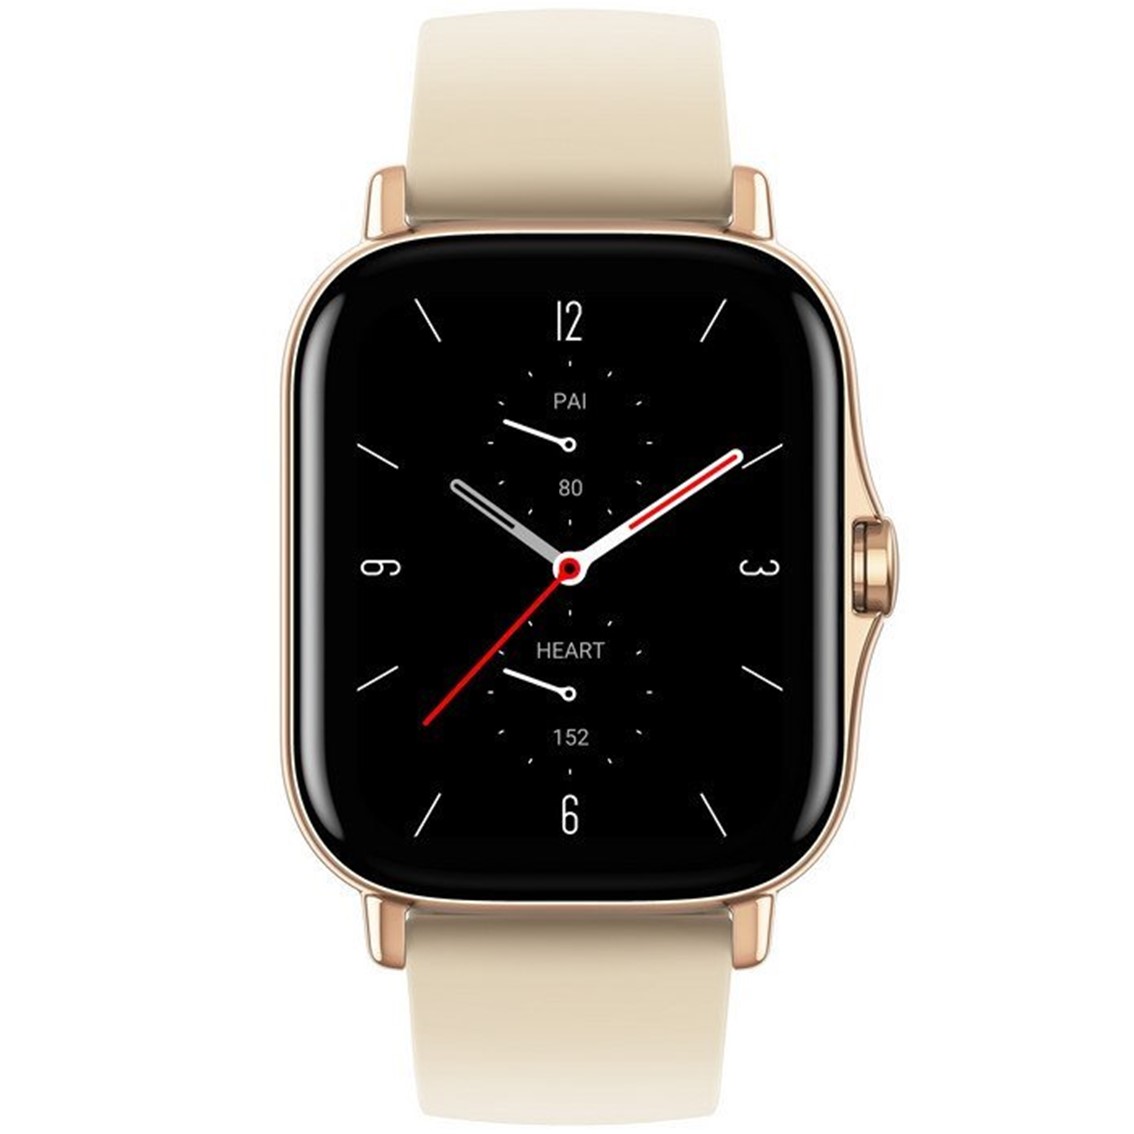 Pulsera reloj deportiva amazfit gts 2 gold -  smartwatch -  1.65pulgadas amoled -   resistente al agua 5 atm